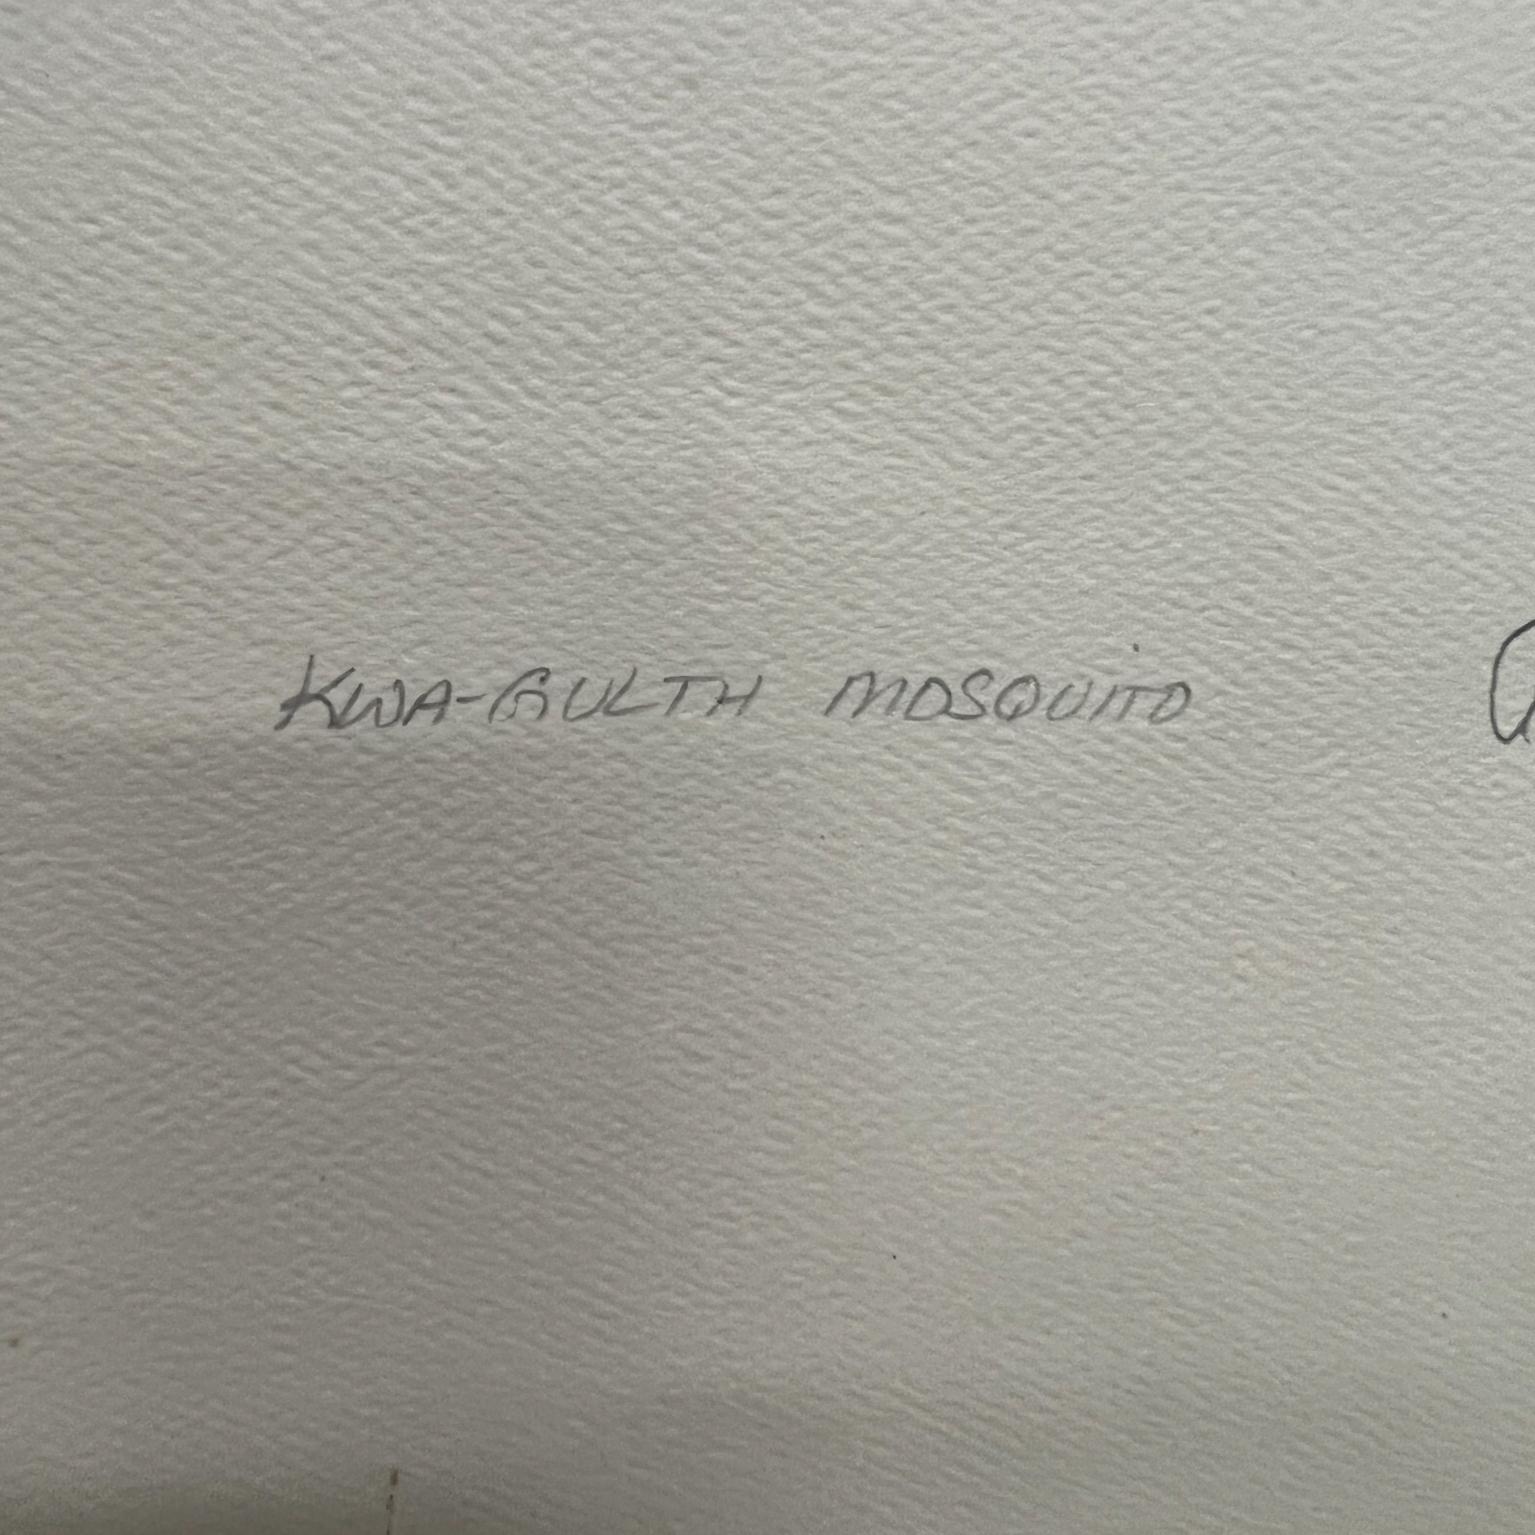 1970er Richard Hunt Kwa Gulth Mosquito Northwest Kunstdruck Signiert Limitiert im Angebot 4